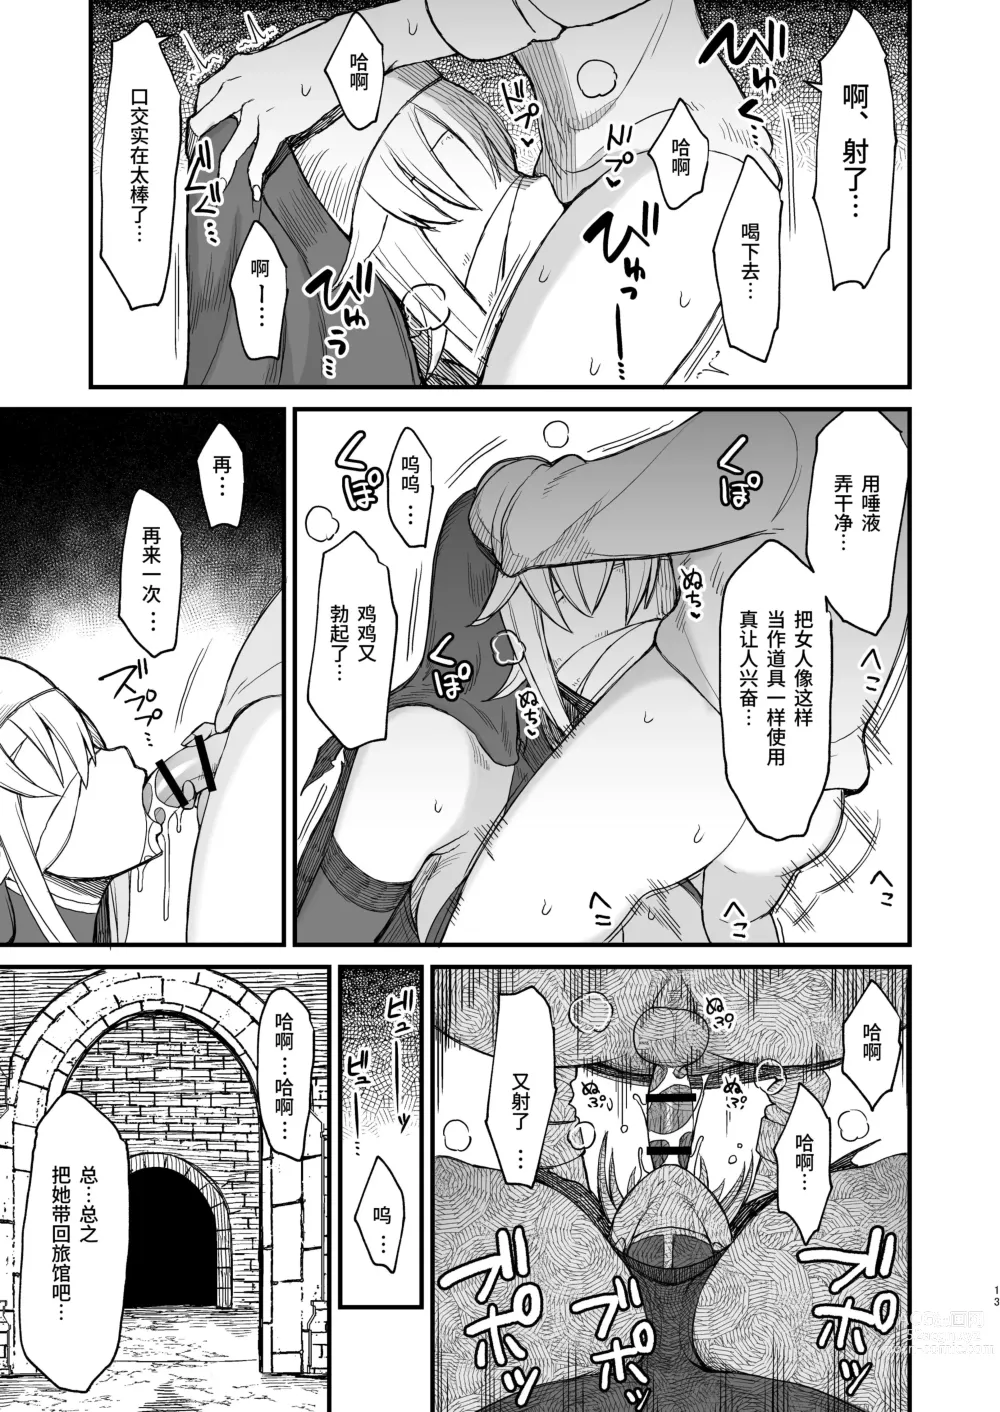 Page 119 of doujinshi 異世界の女たち 1-7